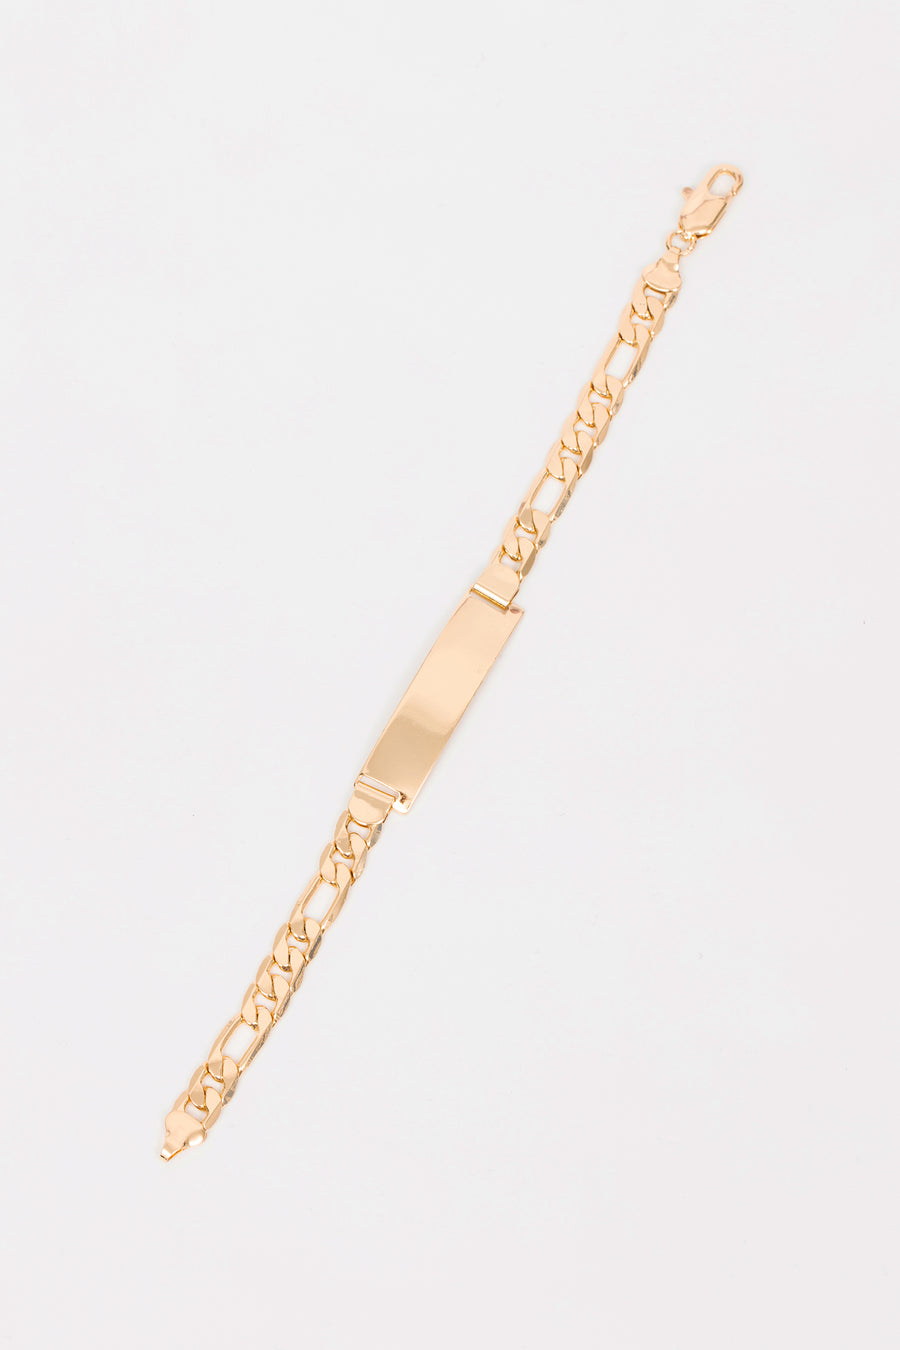 Italian Gold Two Tone Bracelet - Pav & Broome Fine Jewelry